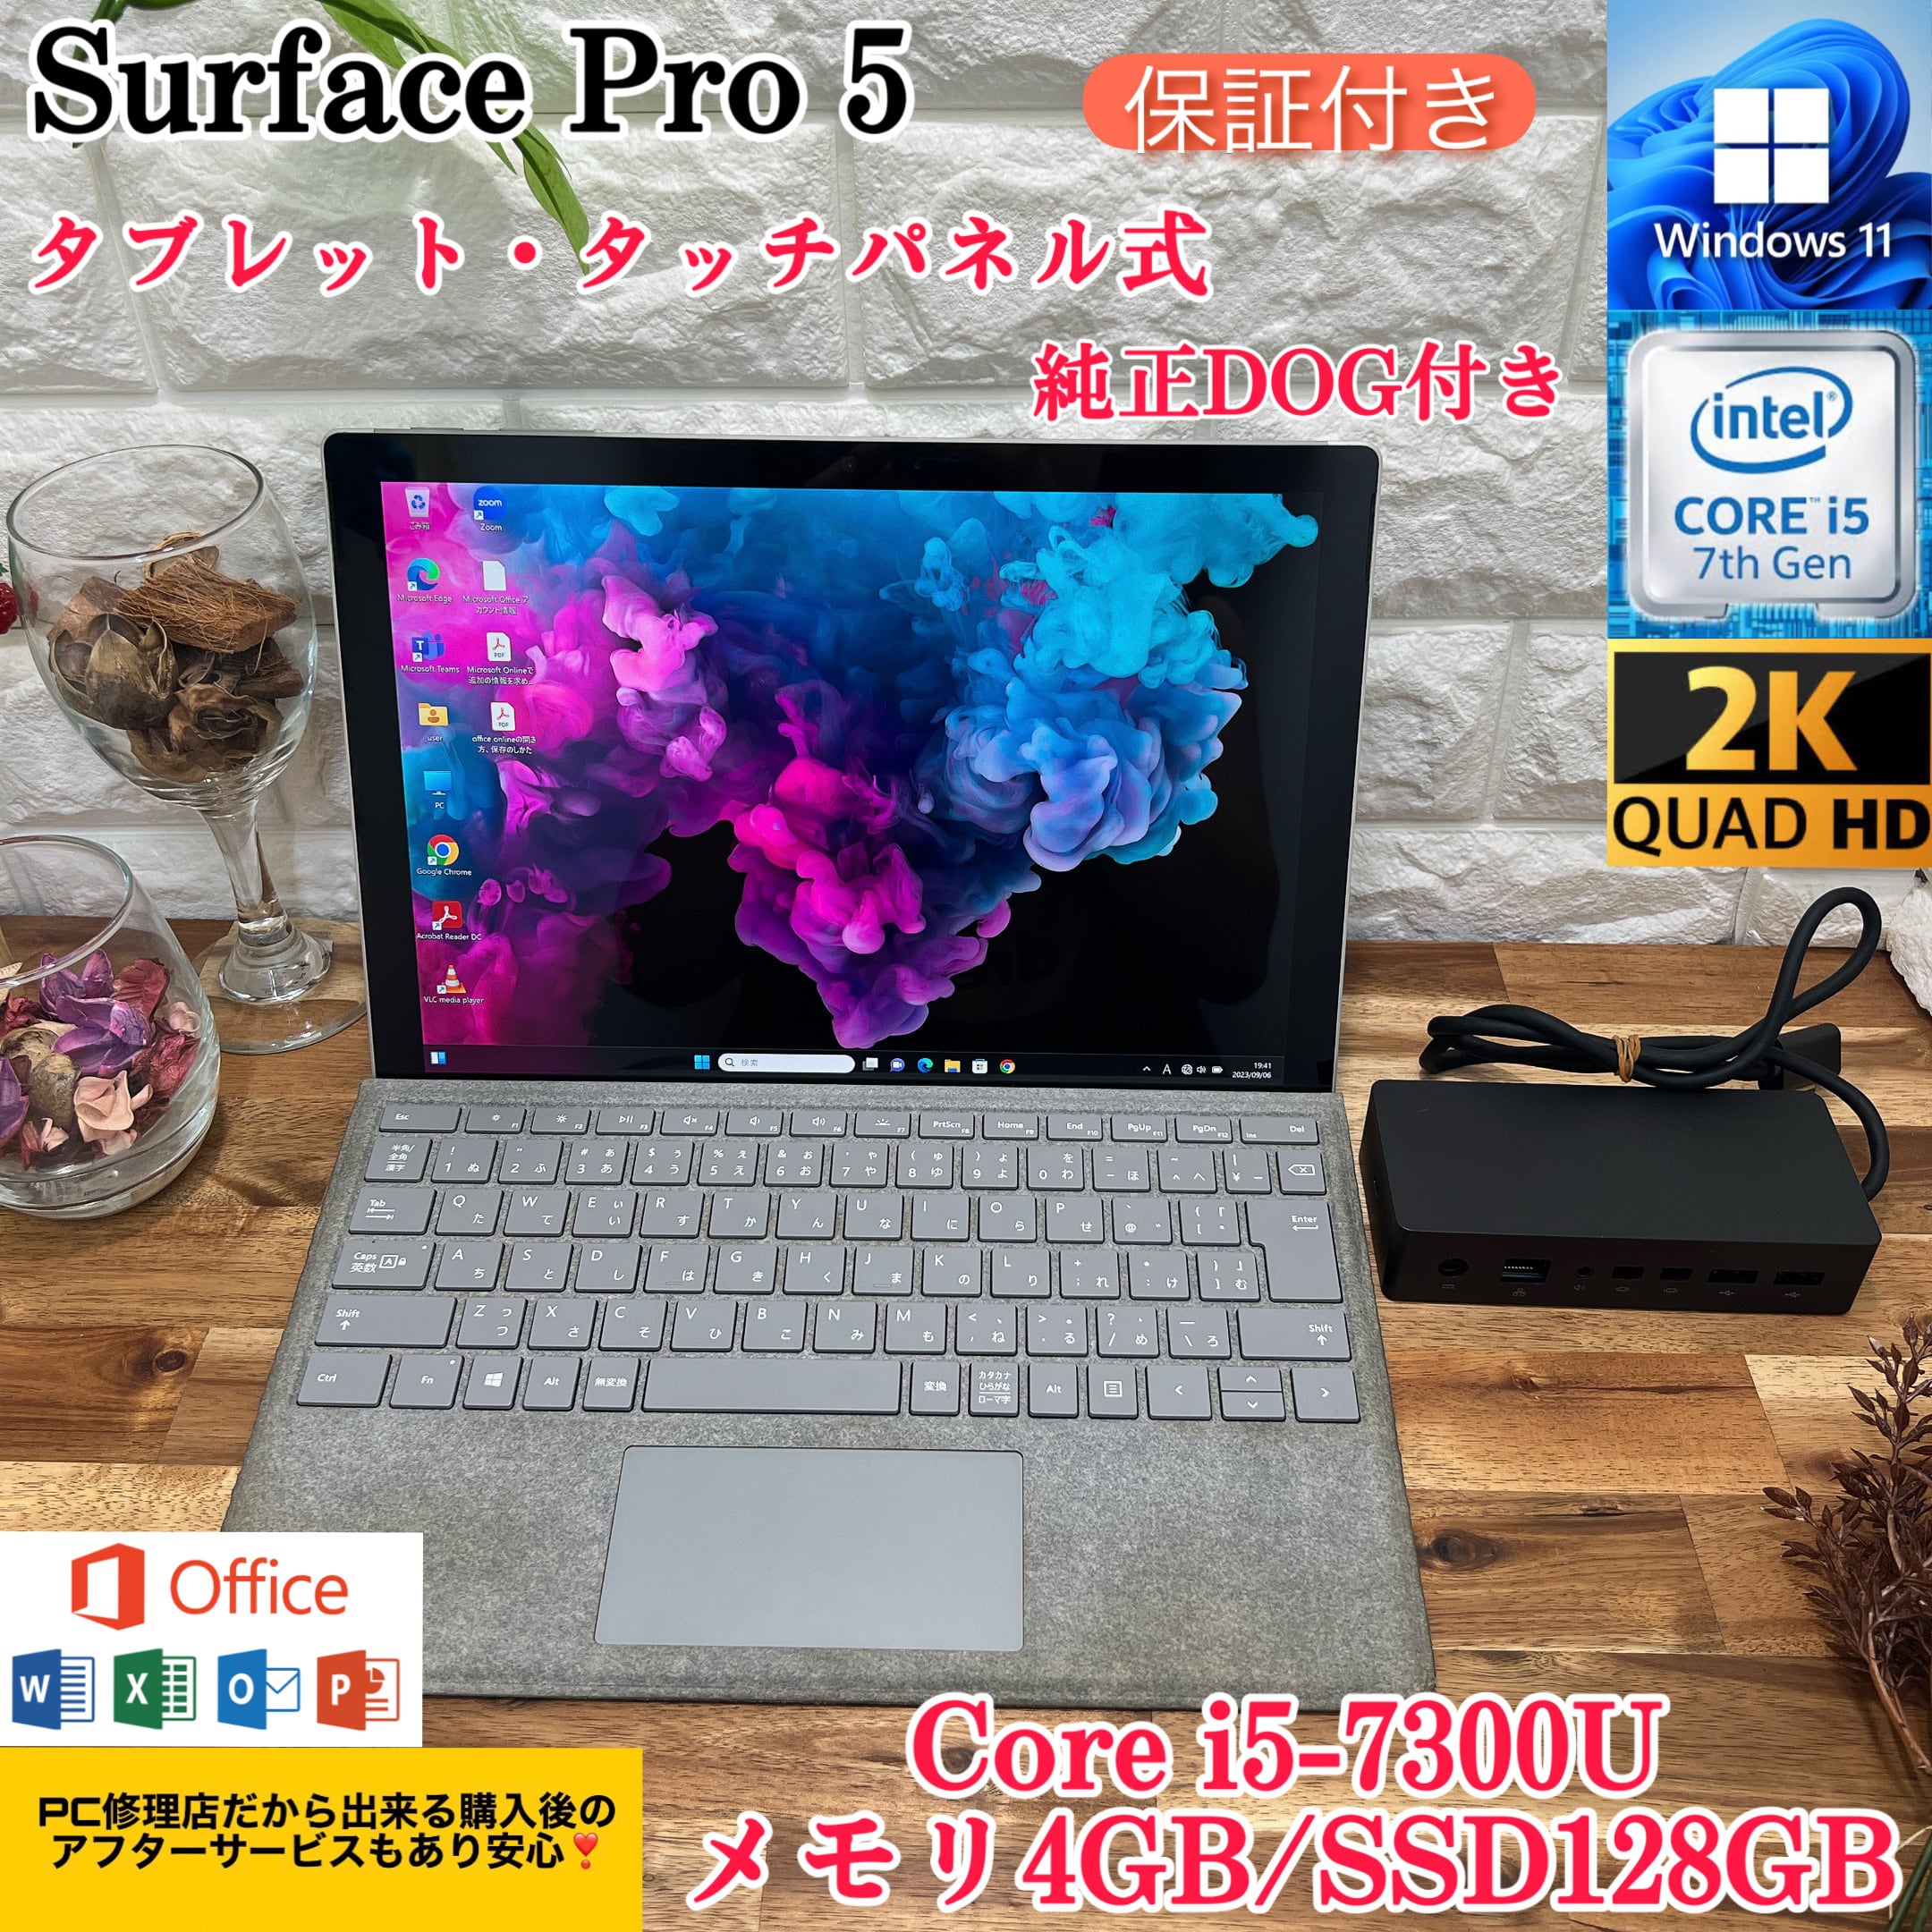 Surface pro 5☘爆速SSD搭載/メモリ8GB☘Core i5第7世代